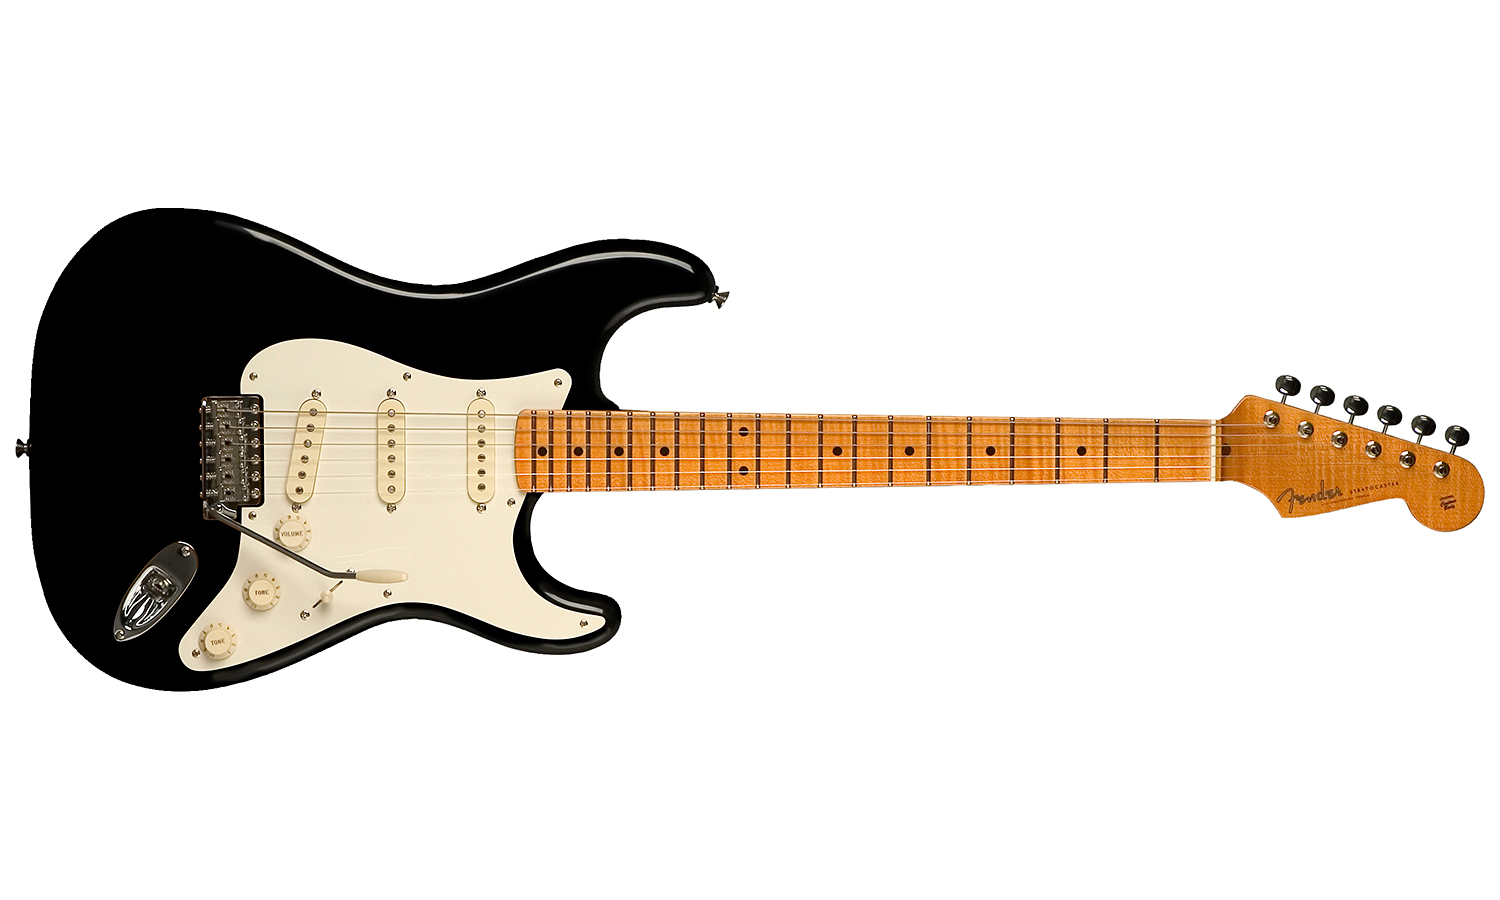 Fender Strat Eric Johnson Usa Signature Sss Mn - Black - Guitare Électrique Forme Str - Variation 1